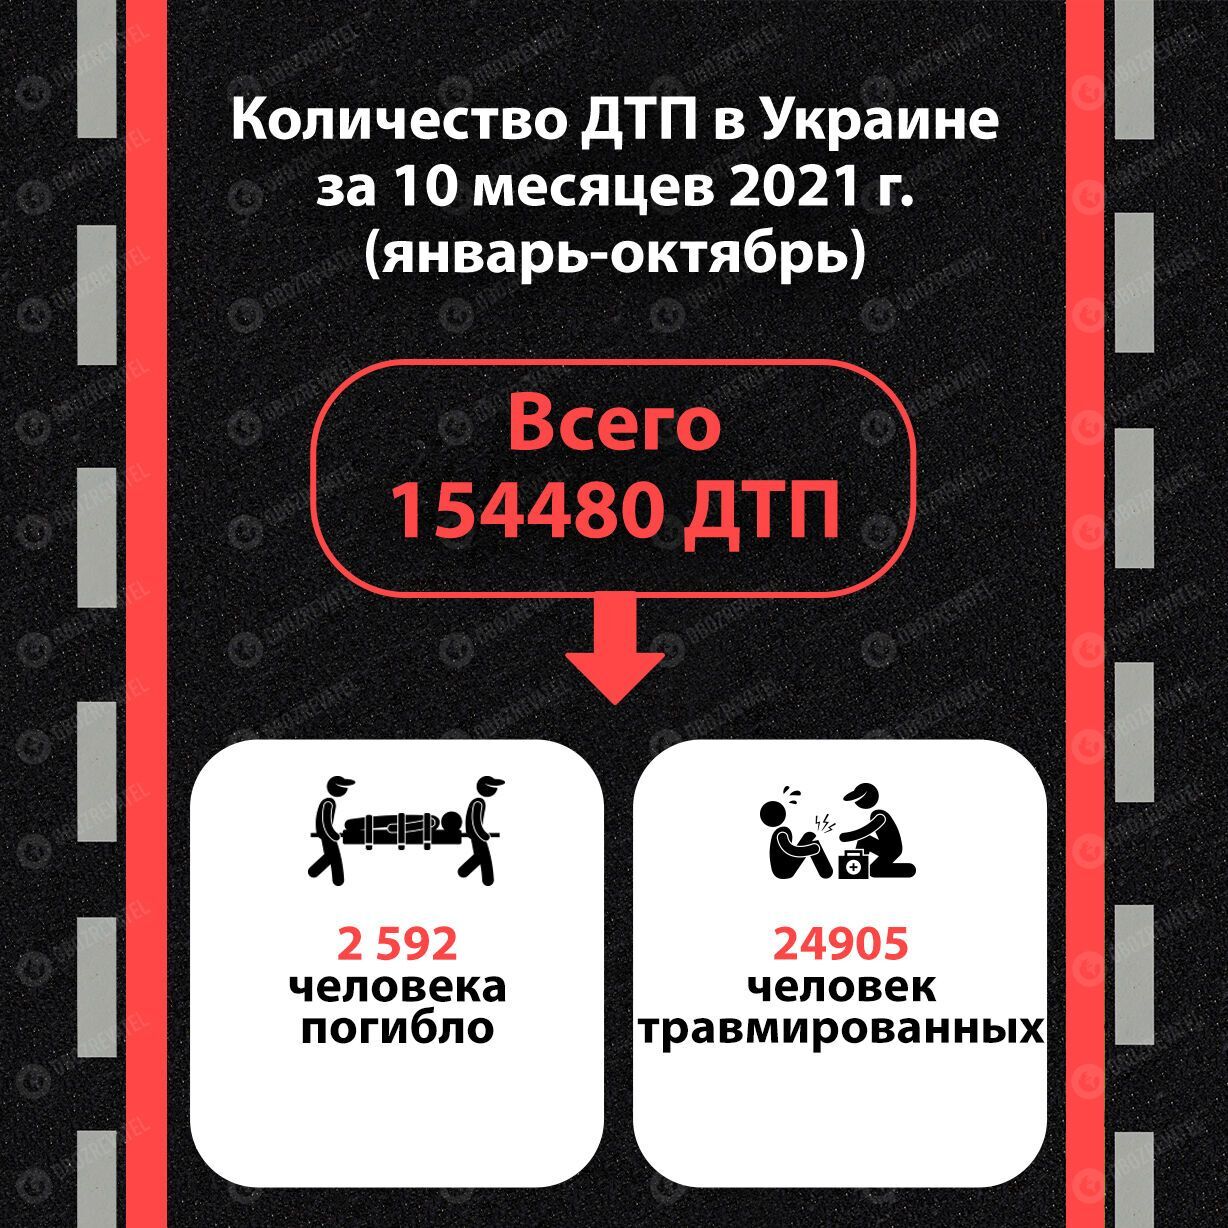 Статистика по ДТП в Украине с начала года